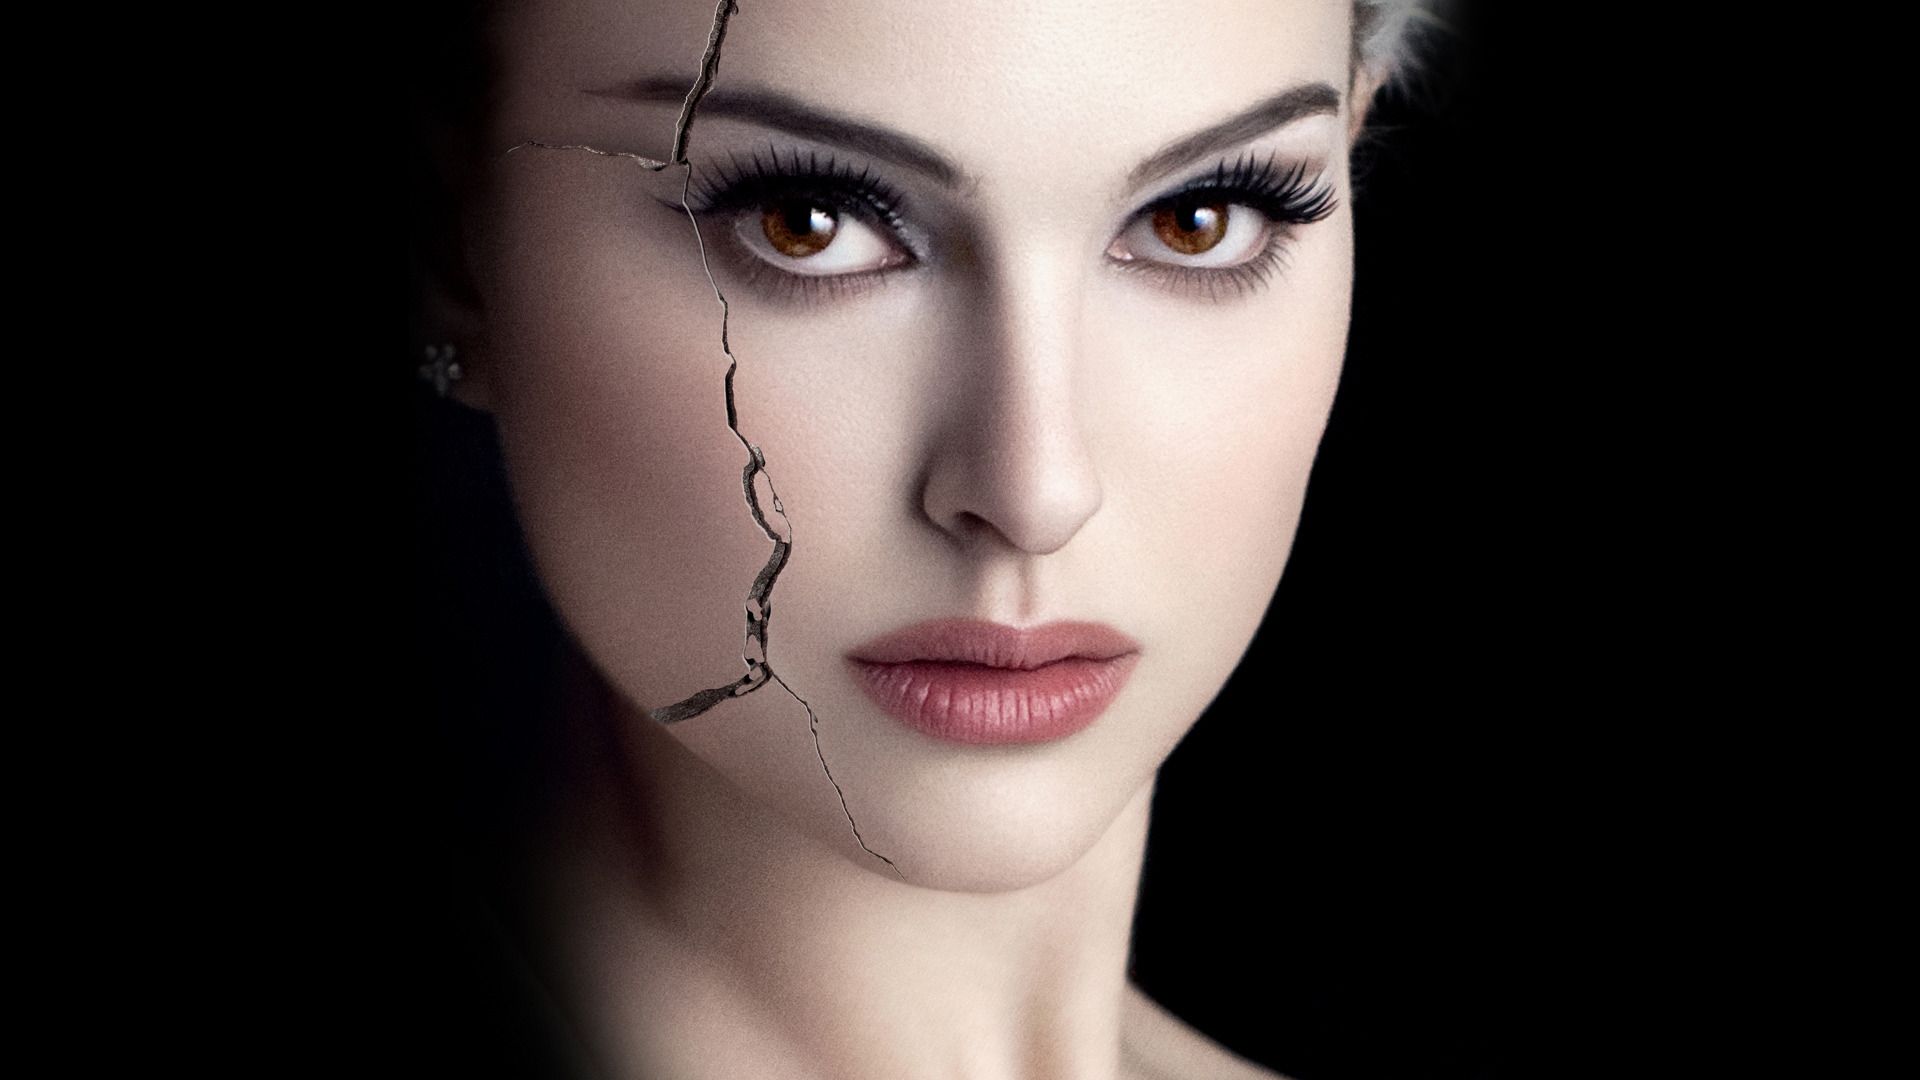 Natalie Portman in promotional artwork for the movie Black Swan.